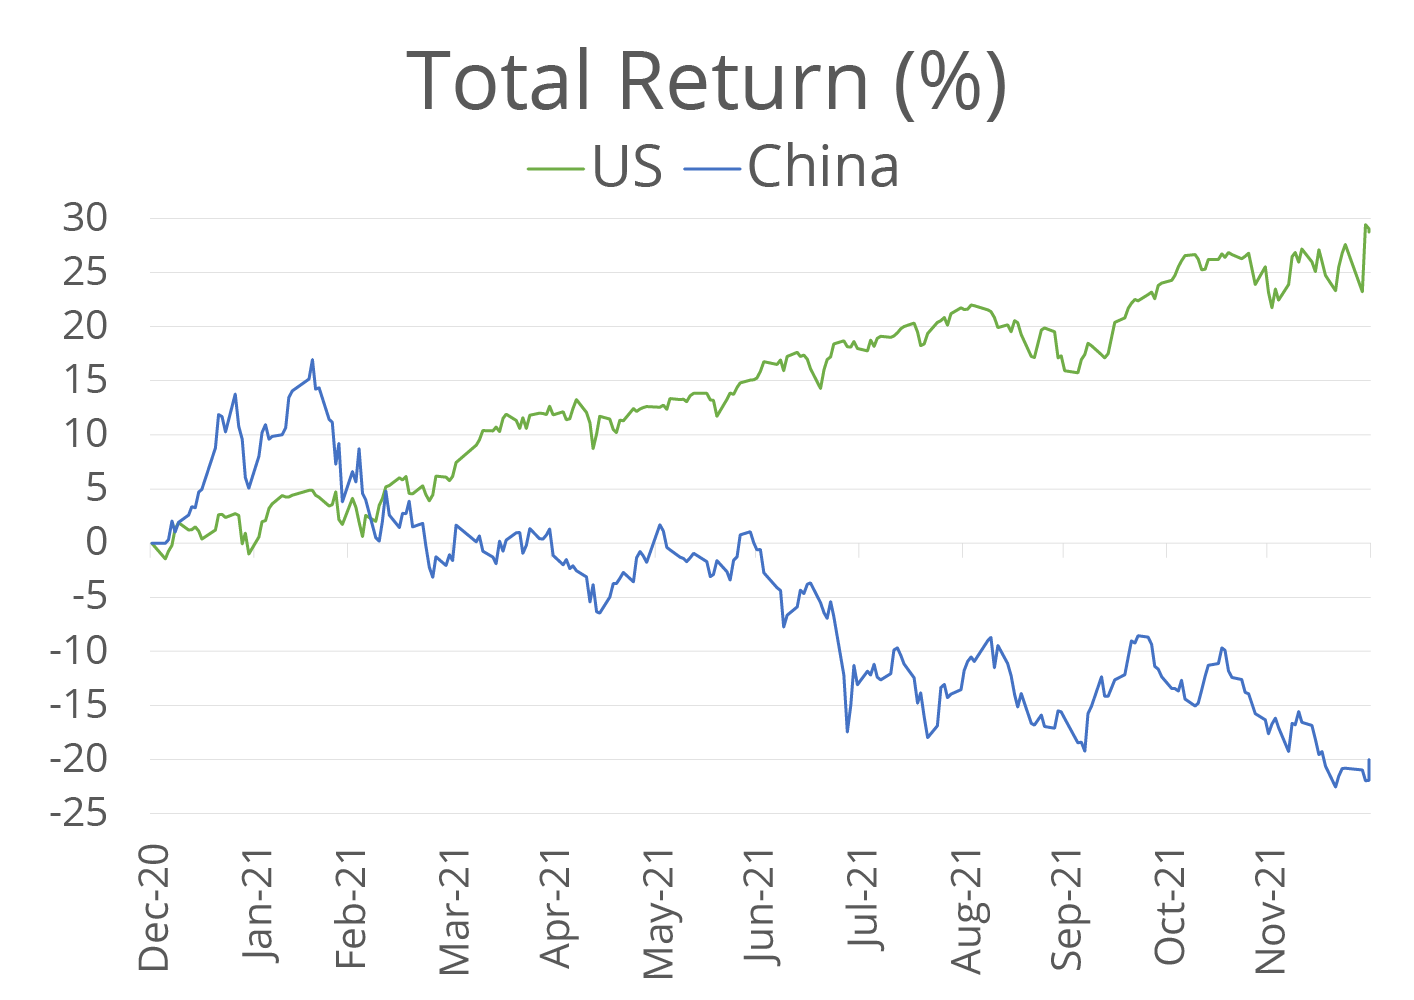 Total Return comparison performance chart of U.S. Stocks vs. Chinese Stocks in 2021.